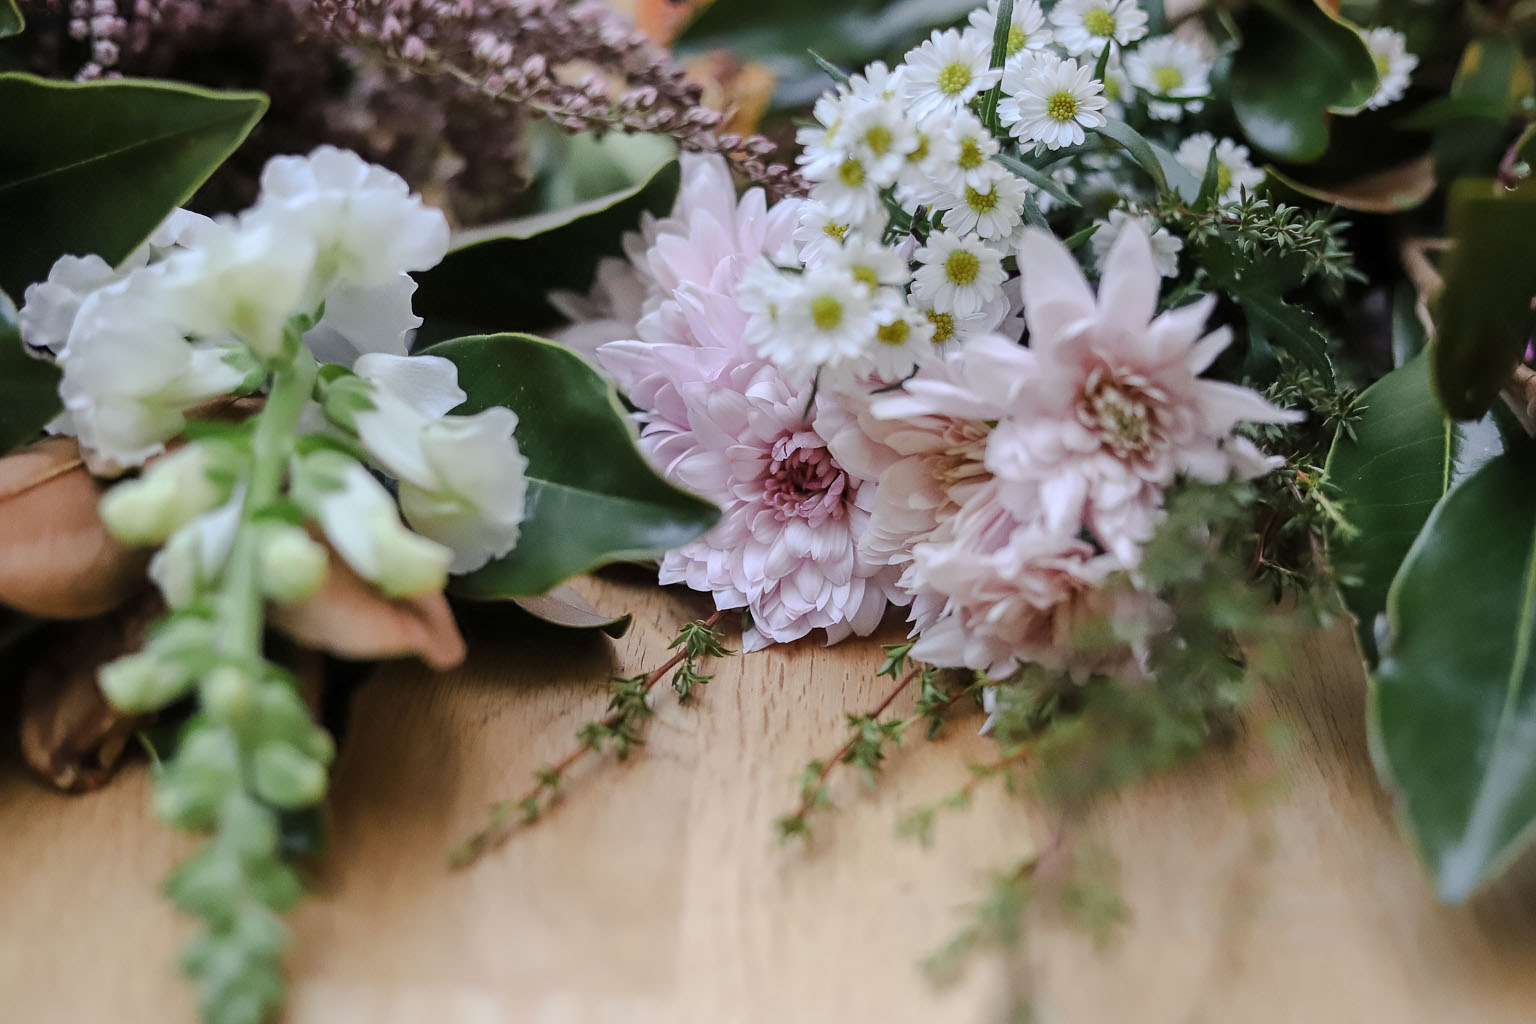 The Style Aesthetic | Rose Tinted Flowers Workshop | New Zealand Lifestyle Blog